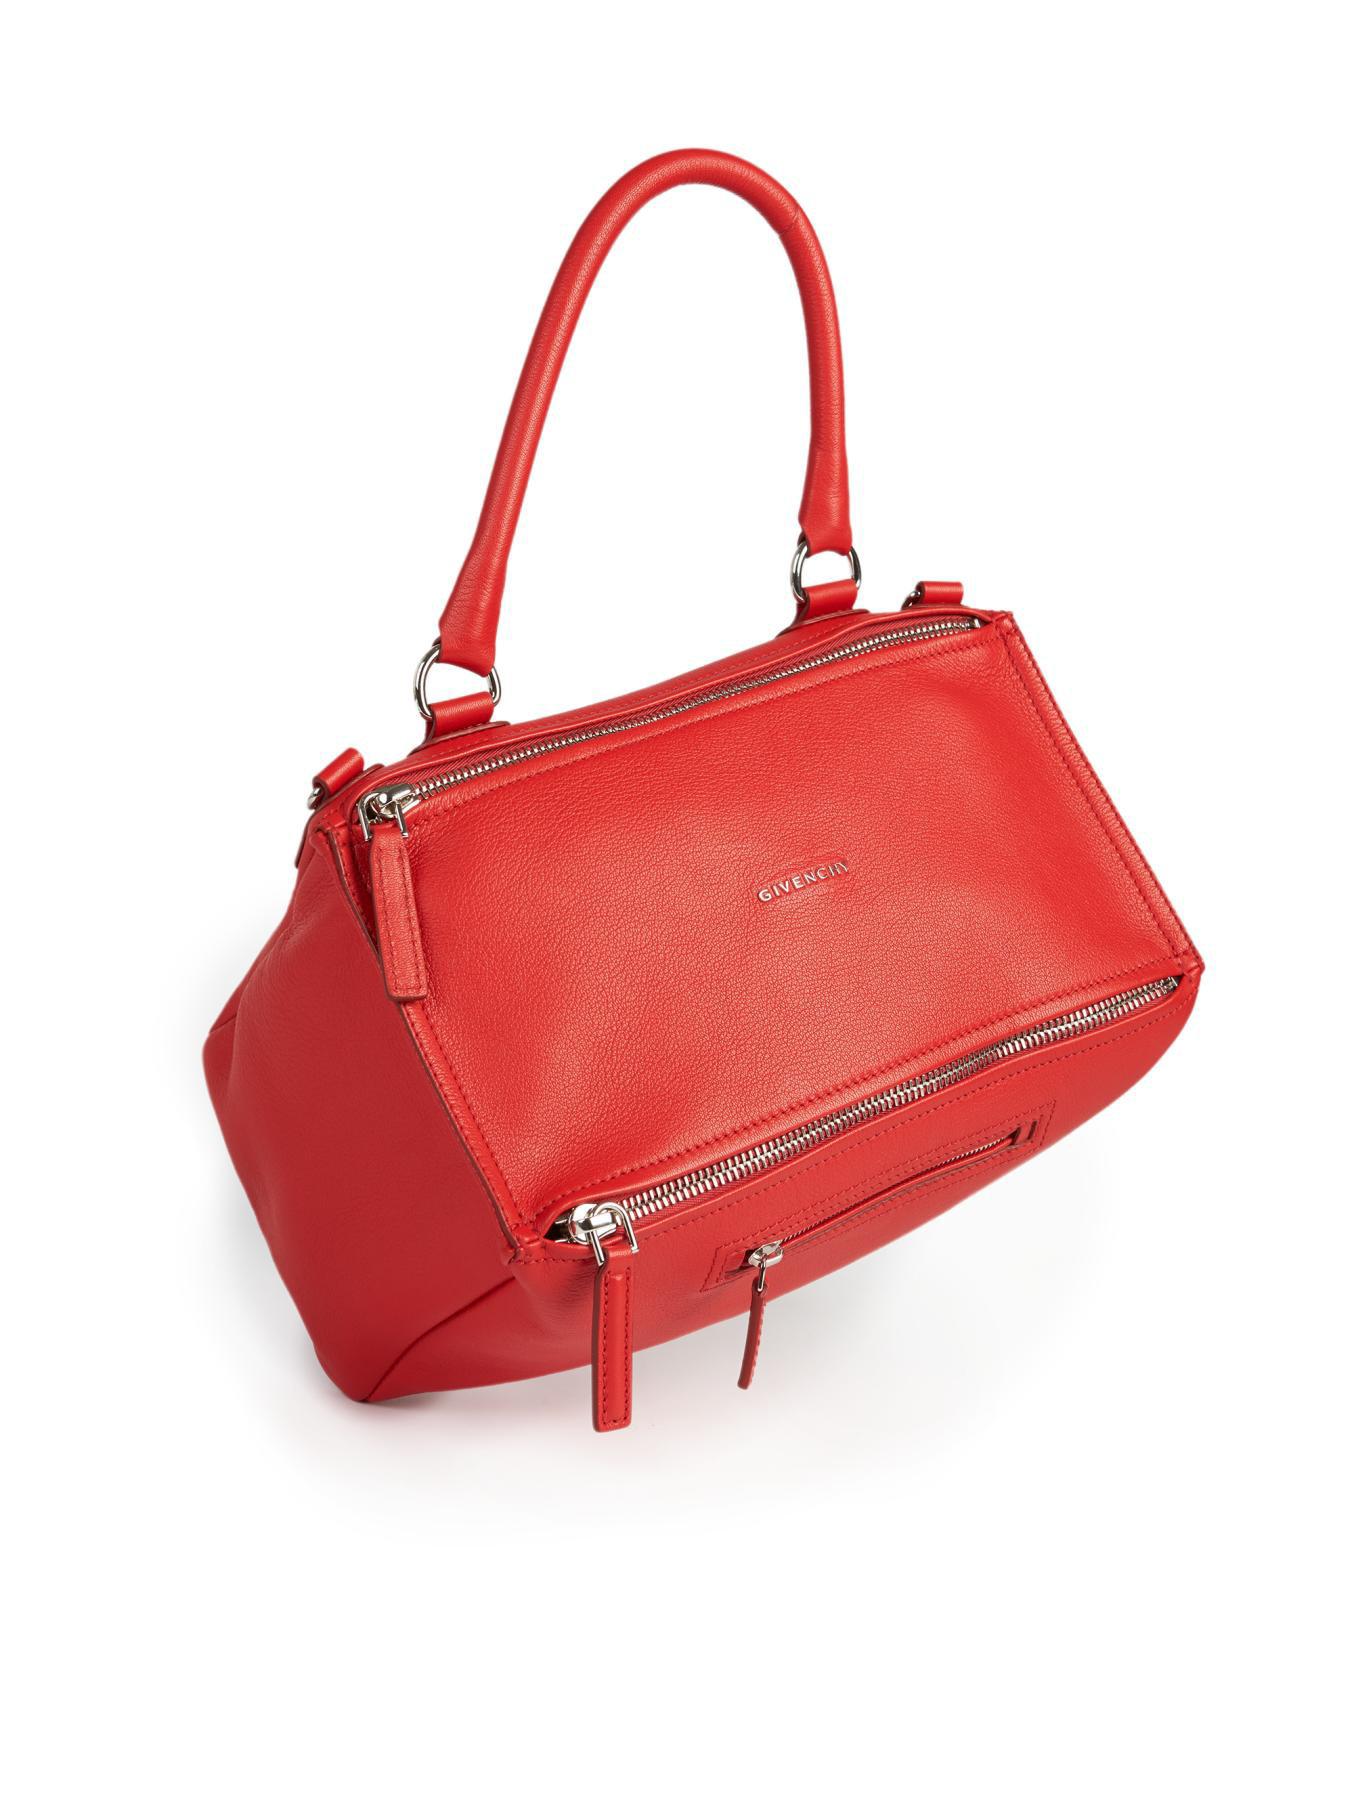 Lyst - Givenchy Pandora Medium Leather Shoulder Bag in Red